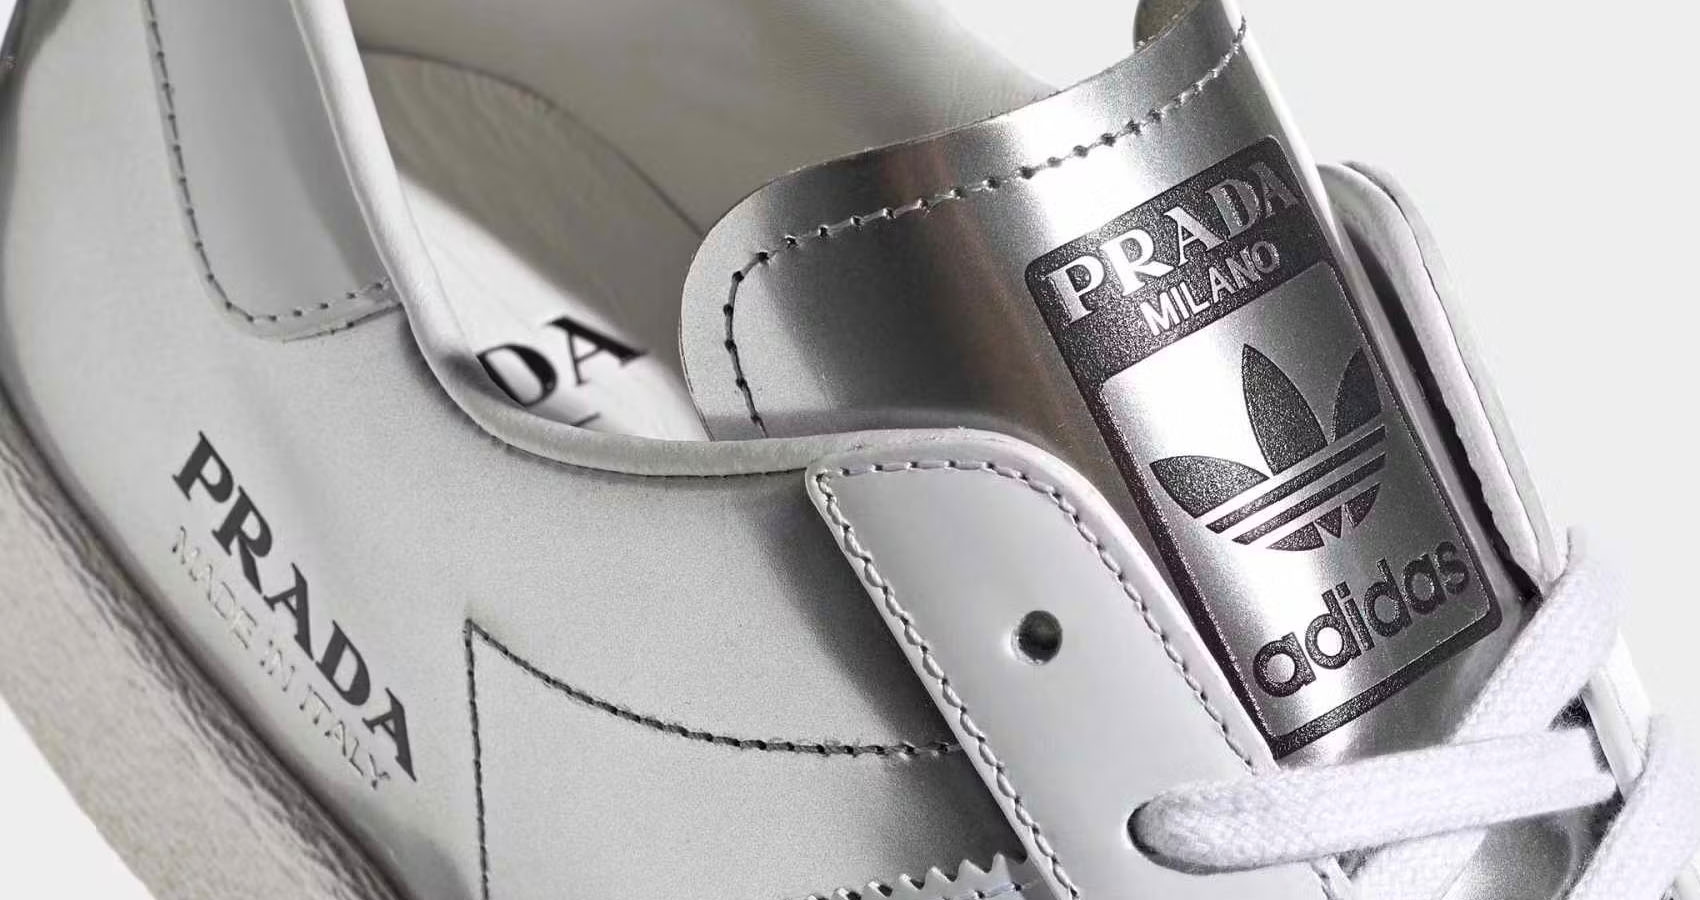 Jerry Lorenzo's Prada And Adidas Collaboration Prada and Adidas Join ...